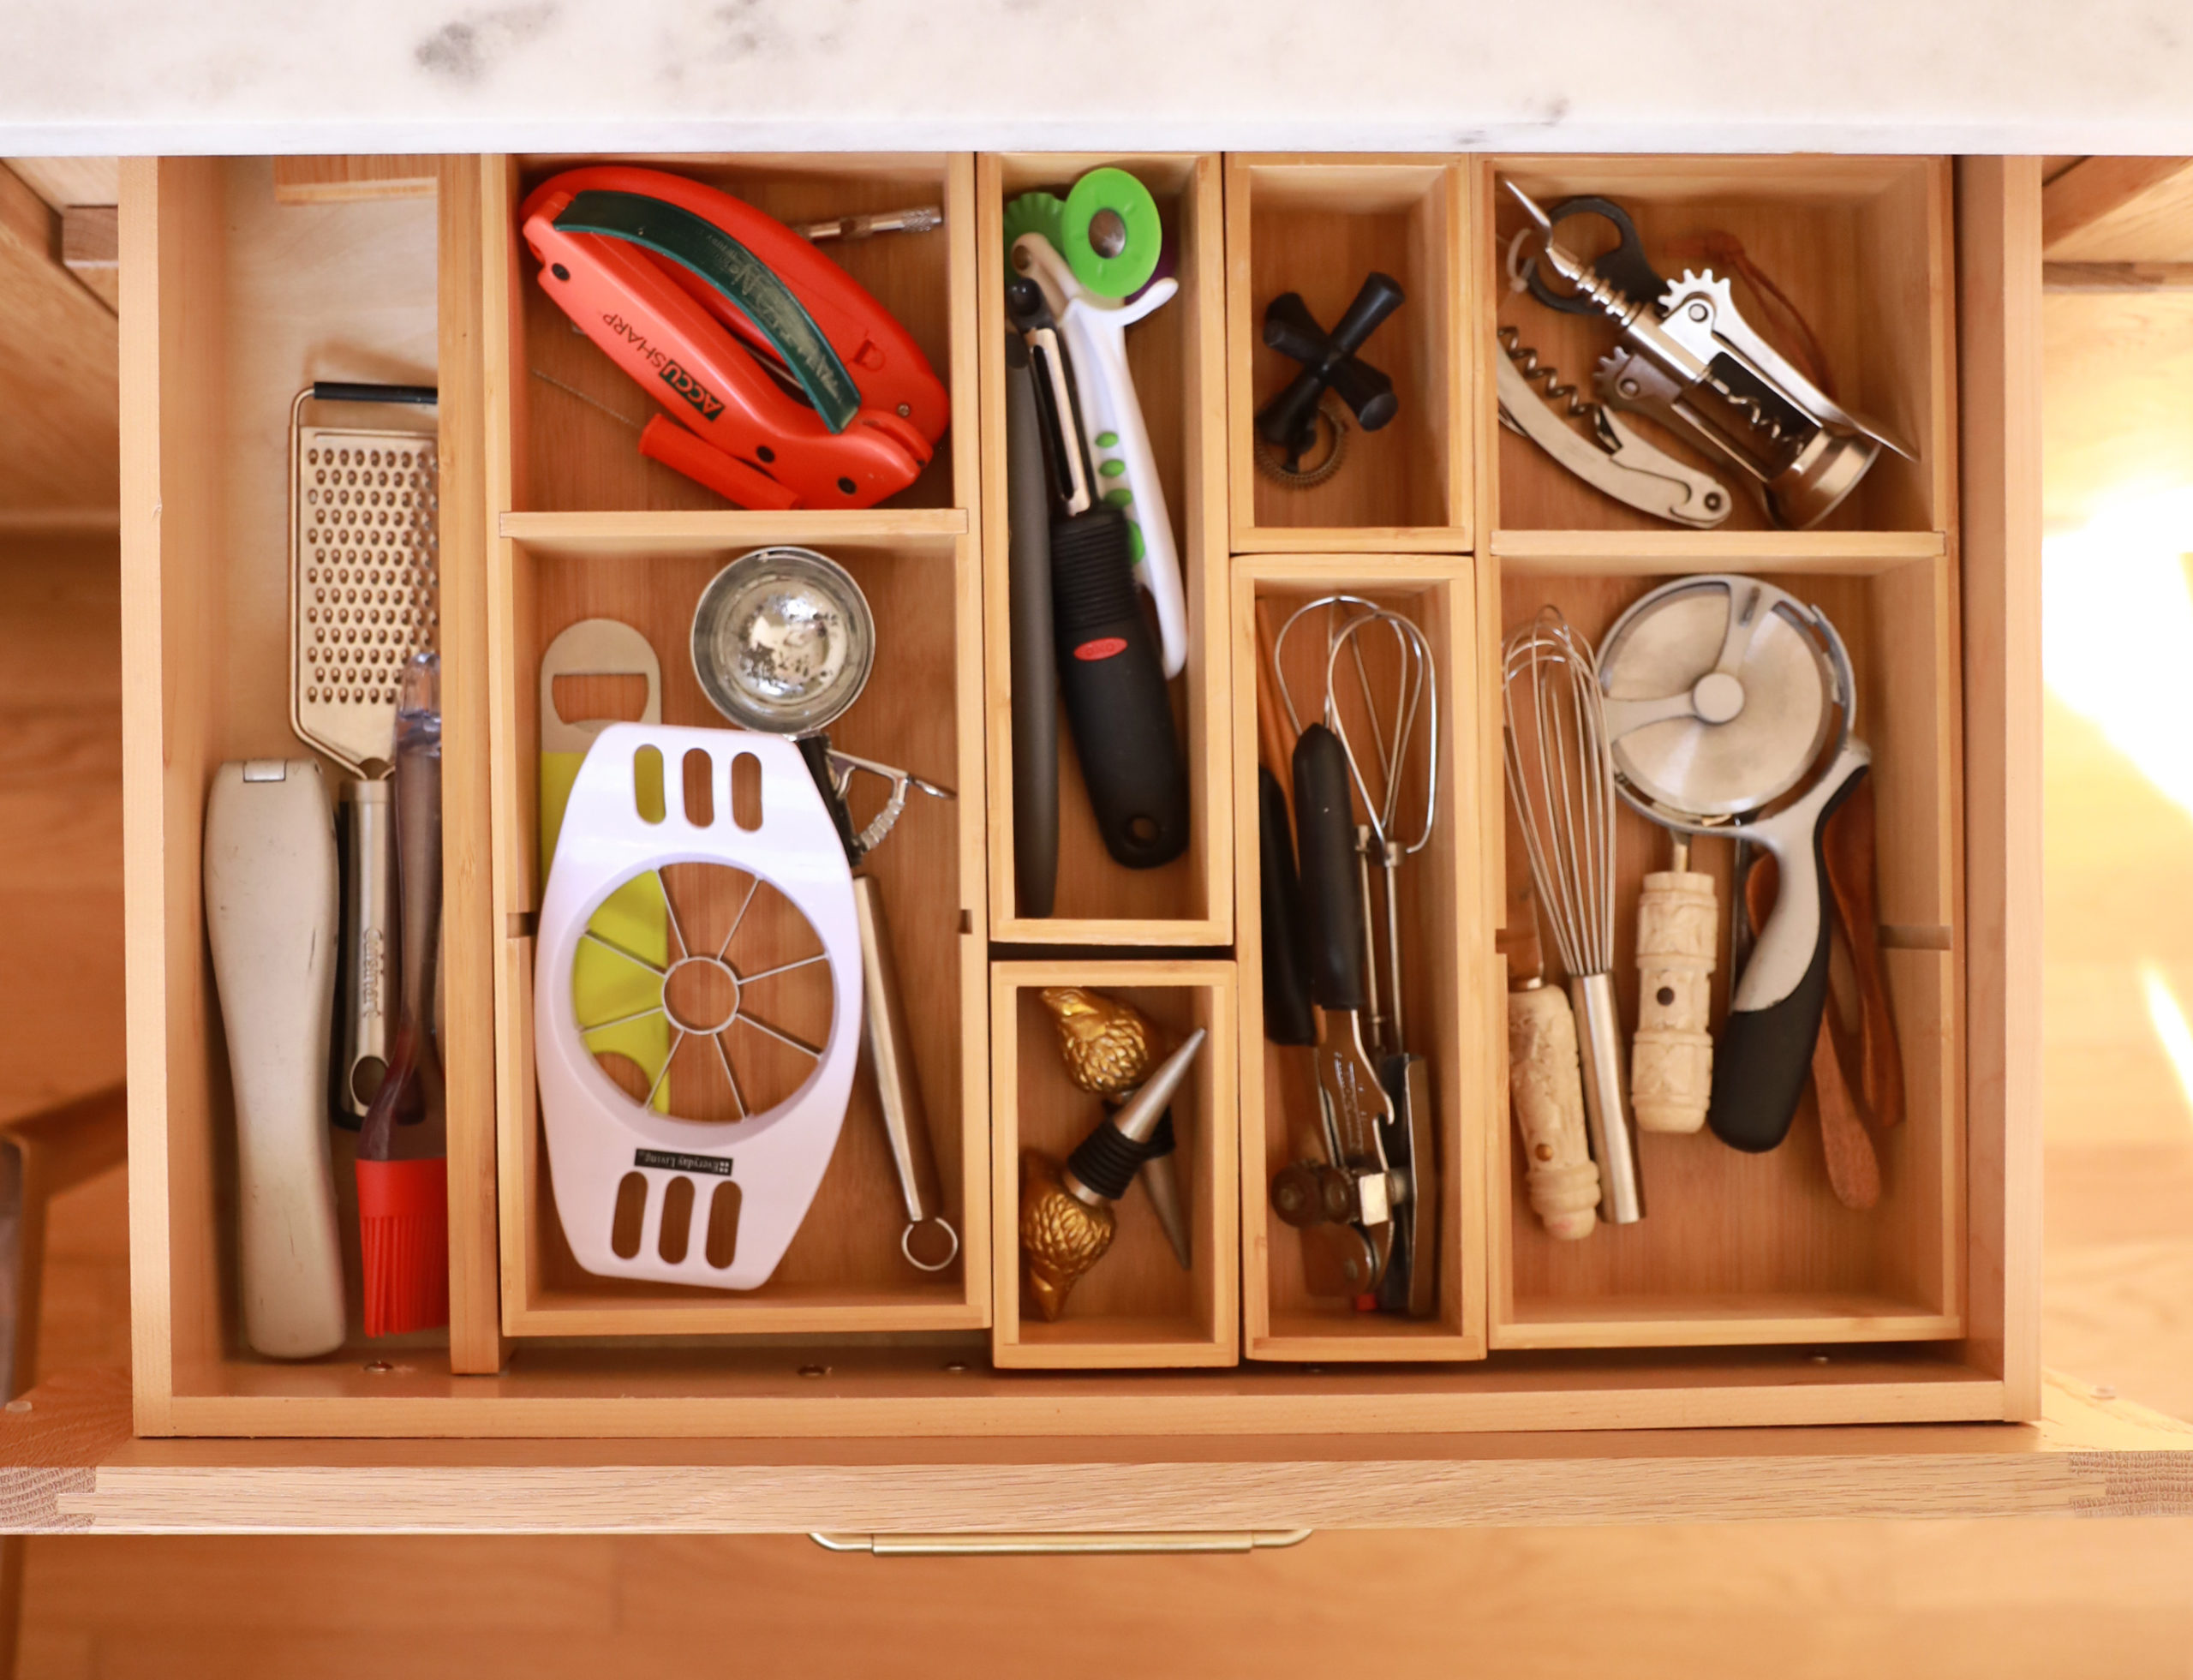 https://inhonorofdesign.com/wp-content/uploads/2022/01/kitchen-utensil-organization-IHOD-1-scaled.jpg